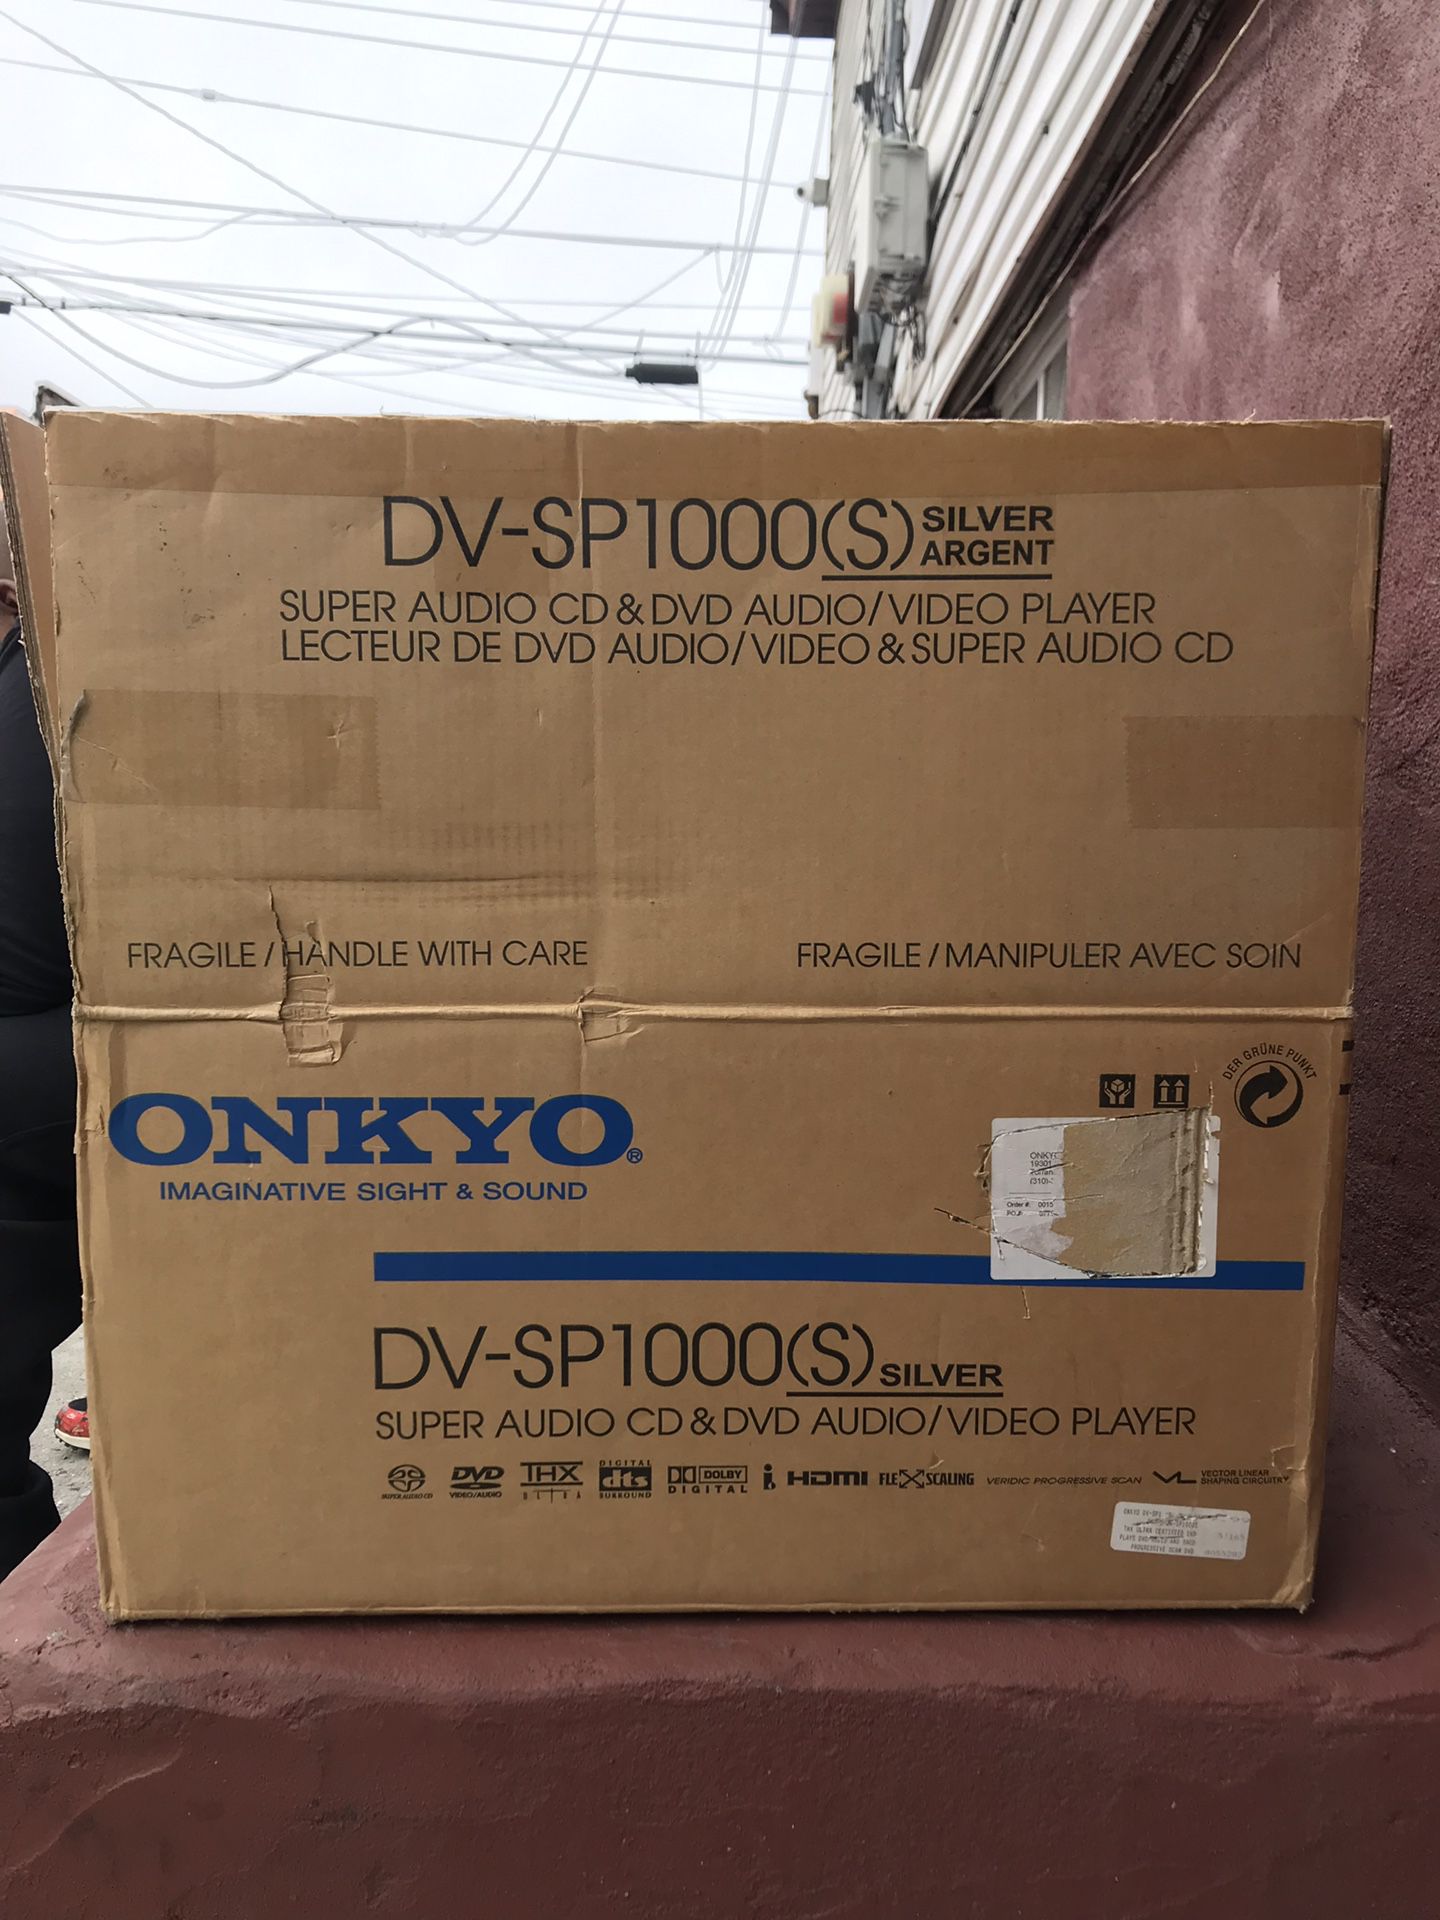 Onkyo DV-SP1000(s)